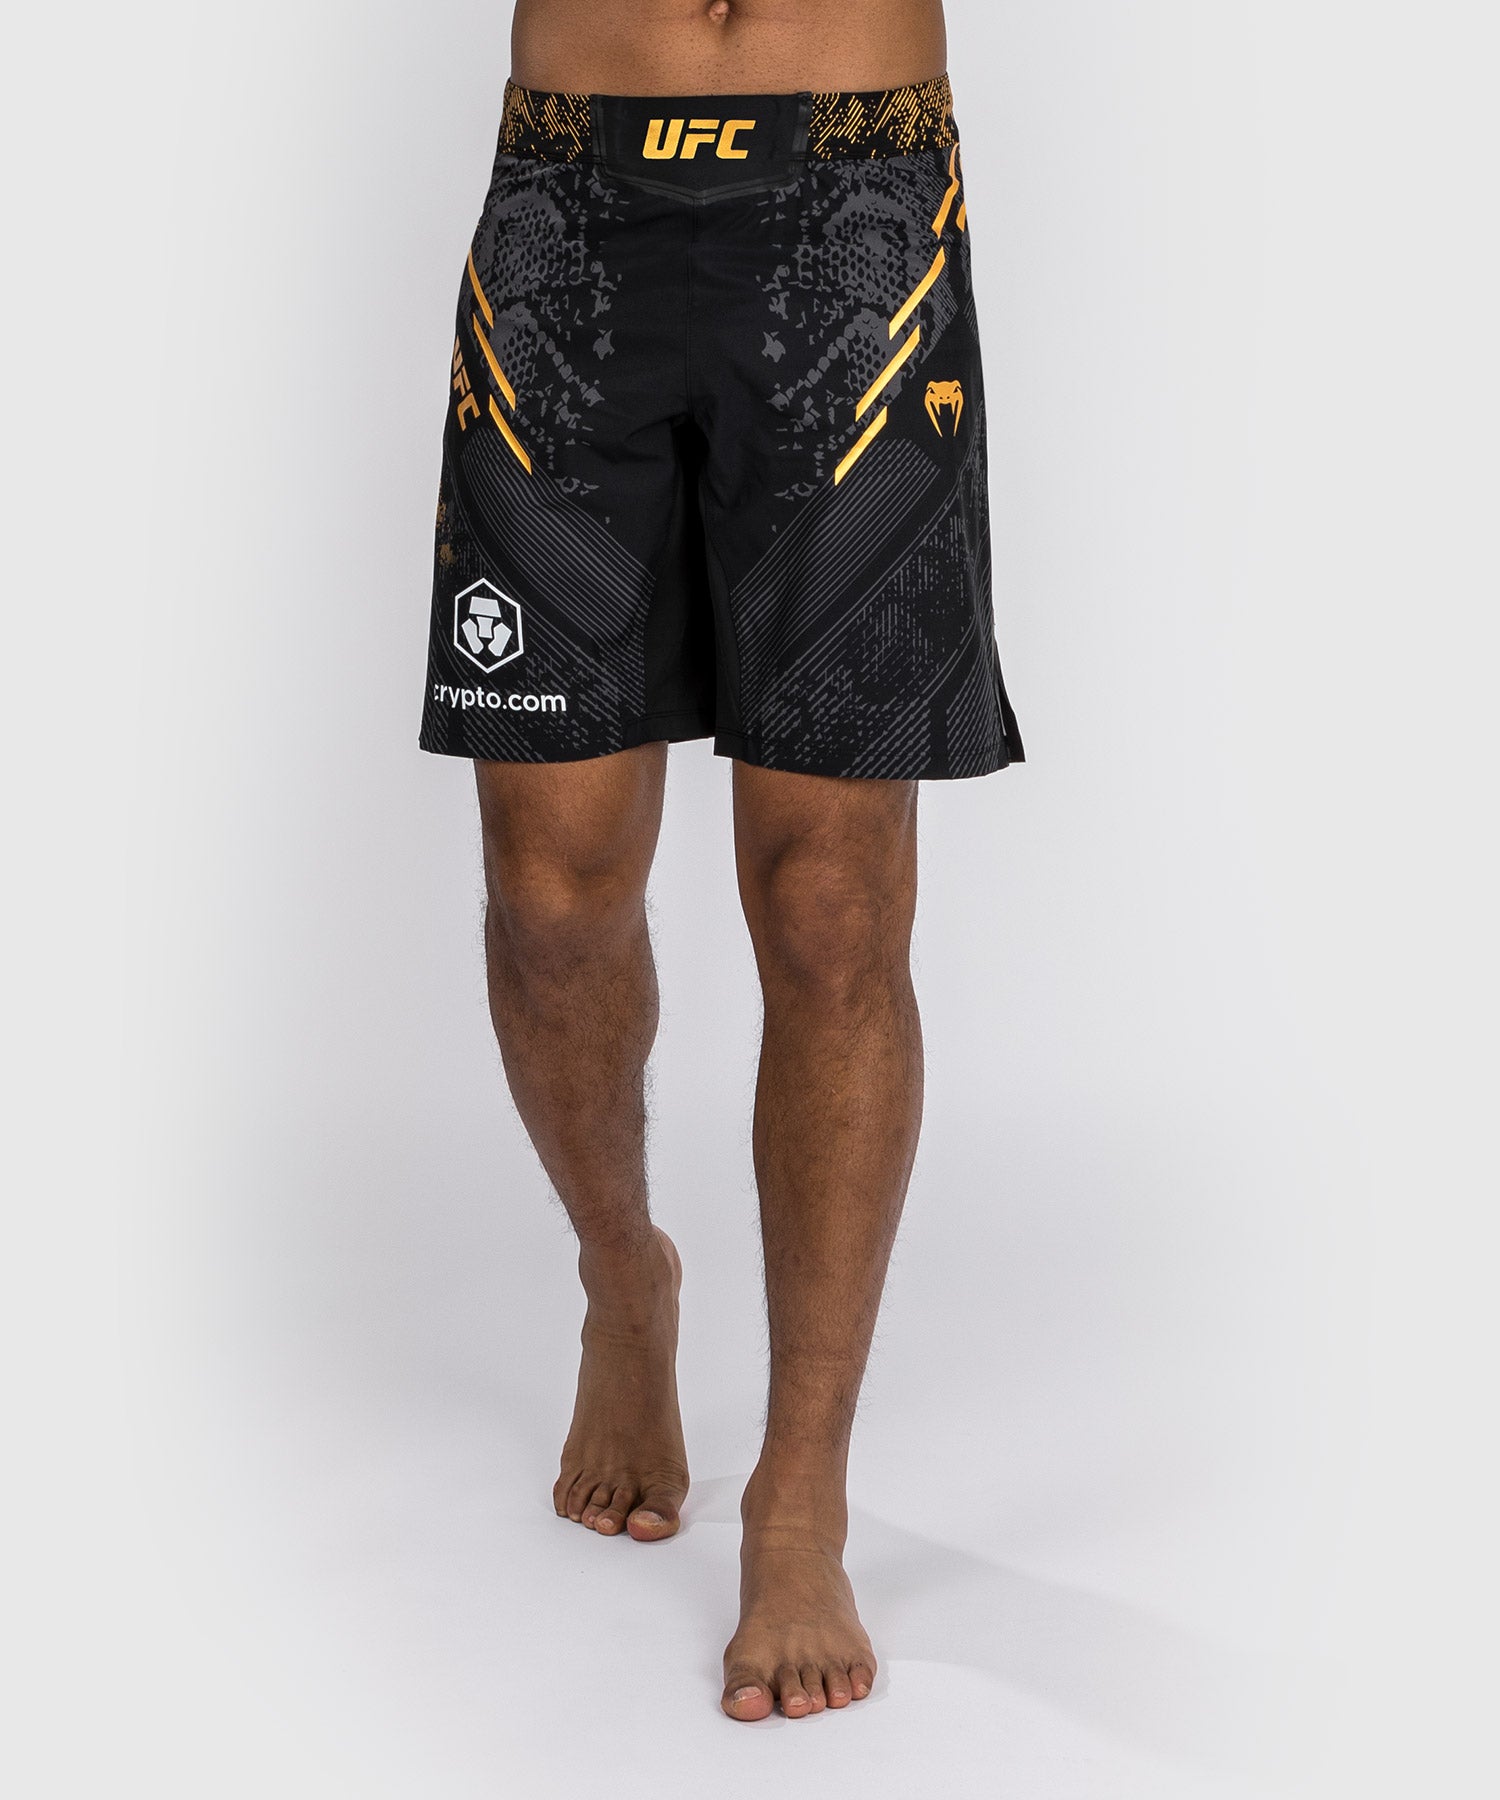 UFC Venum Replica Men's Shorts - Champion: S